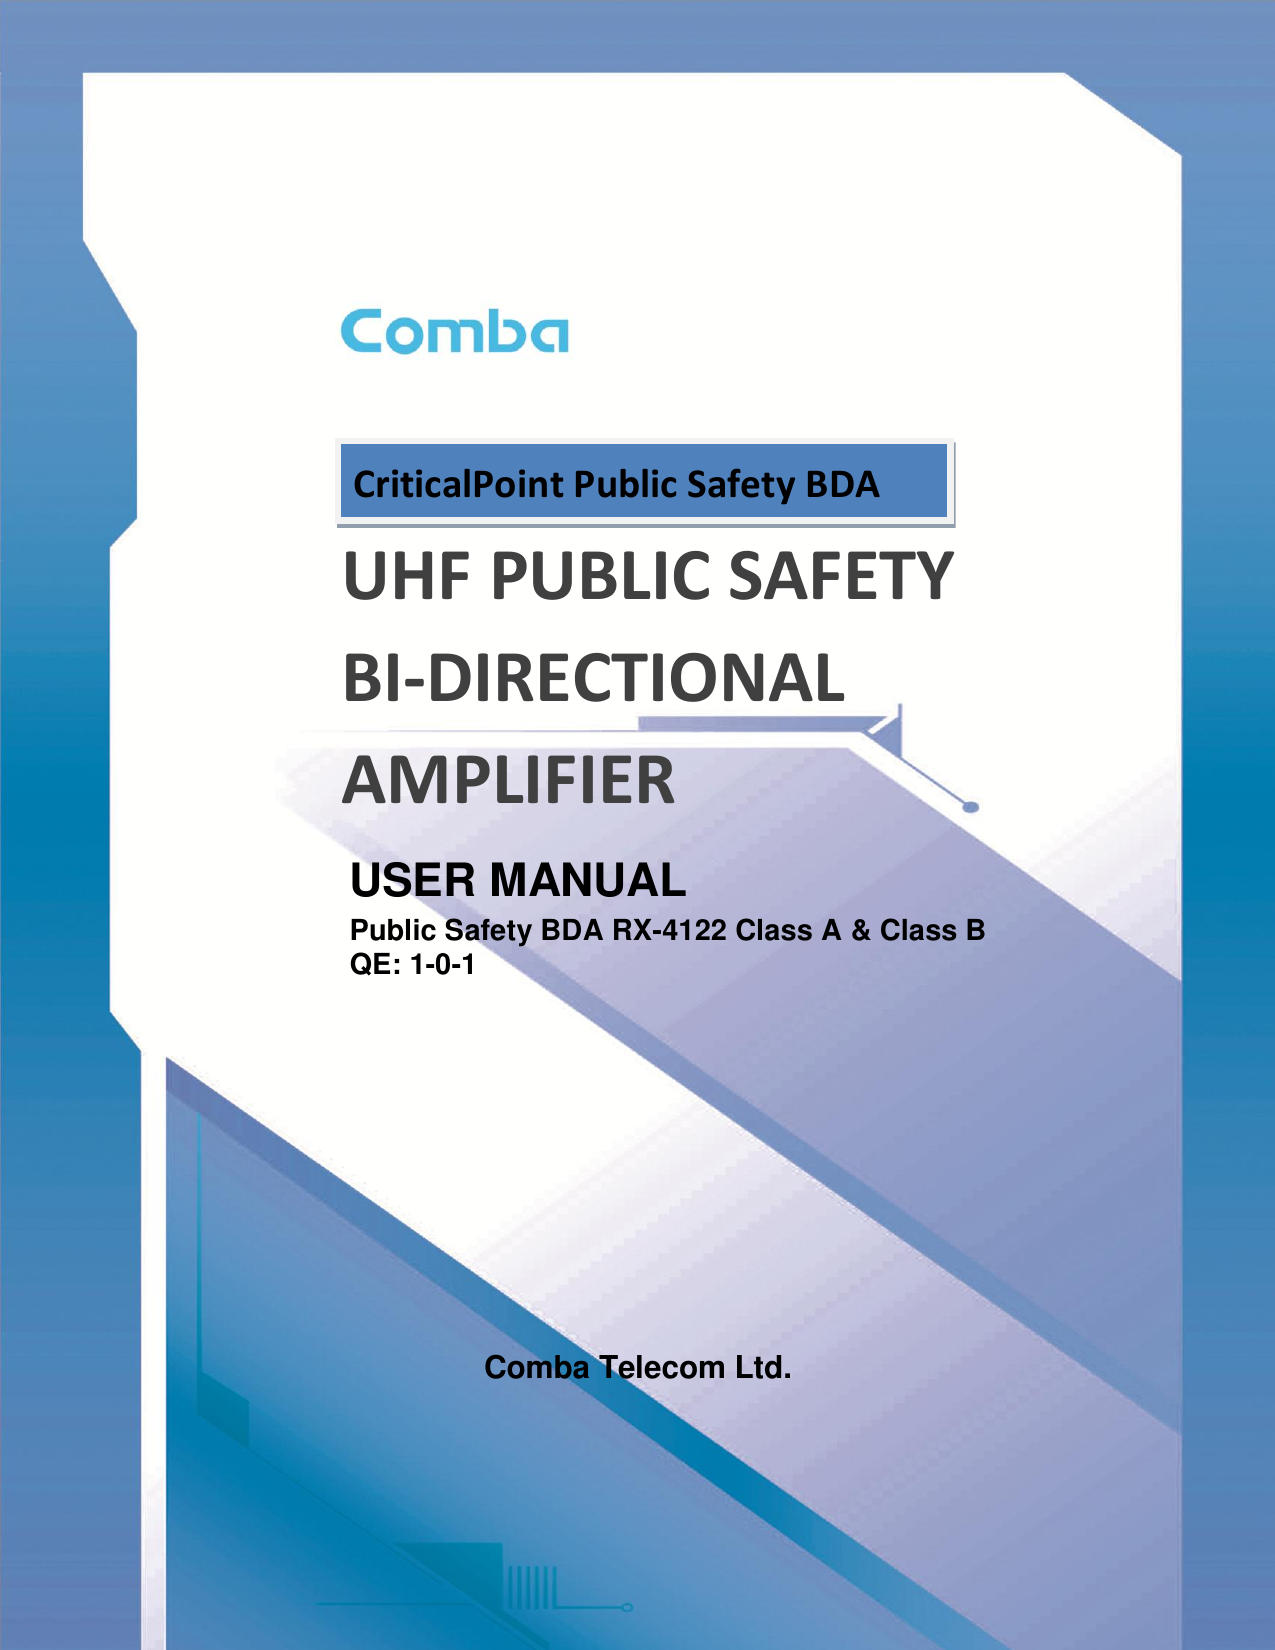                UHF PUBLIC SAFETY BI-DIRECTIONAL AMPLIFIER USER MANUAL Public Safety BDA RX-4122 Class A &amp; Class B  QE: 1-0-1         Comba Telecom Ltd.   CriticalPoint Public Safety BDA 